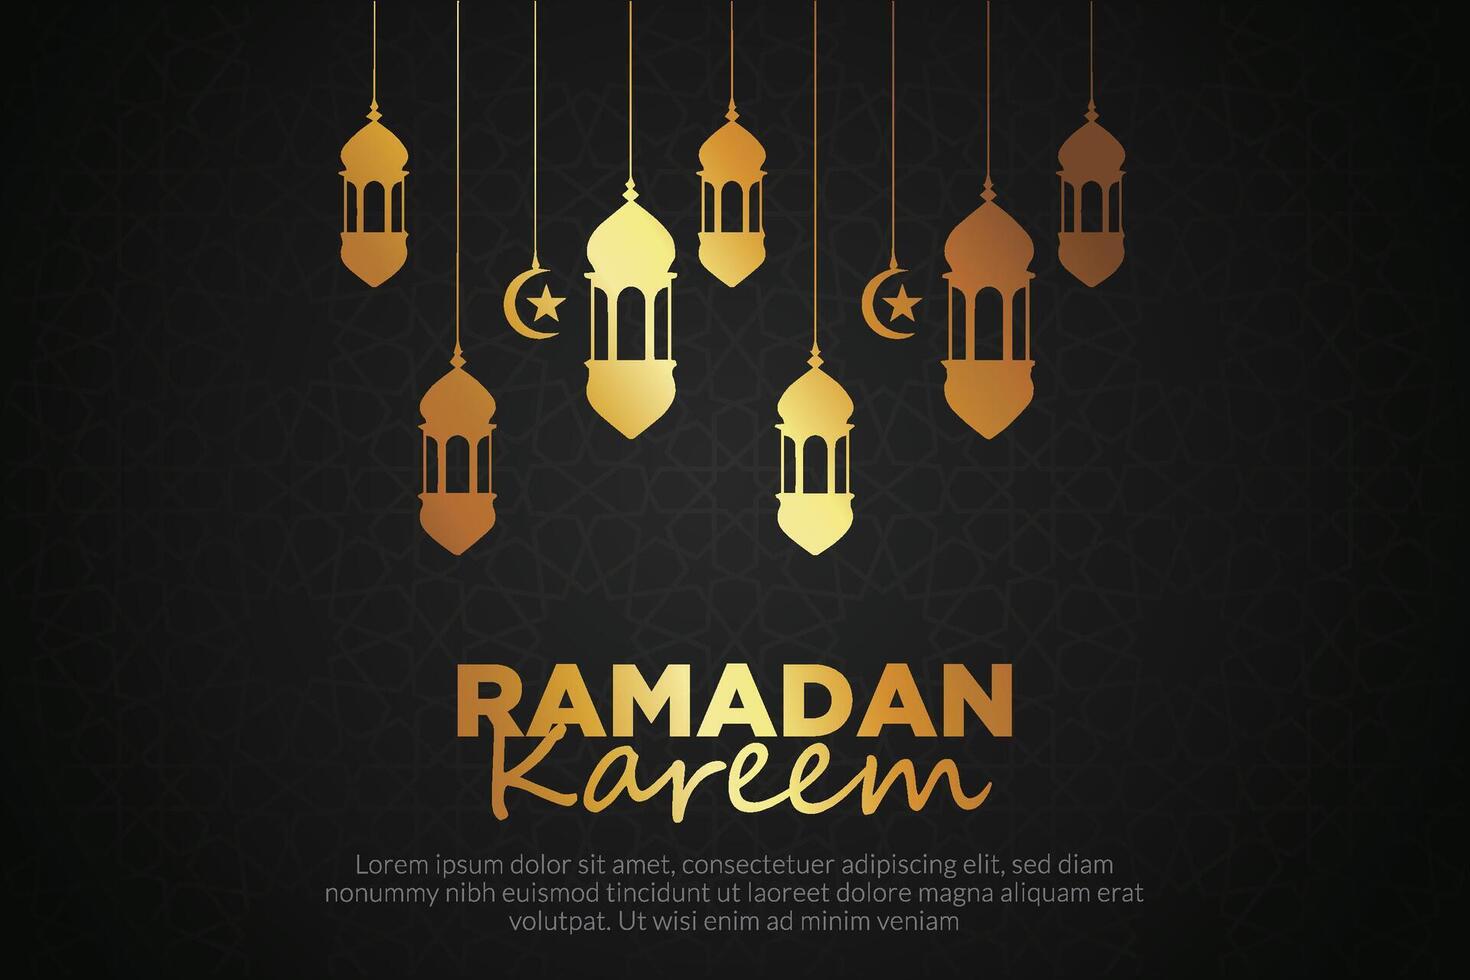 vetor elegante luxuoso Ramadã, eid al-fitr, islâmico fundo decorativo cumprimento cartão